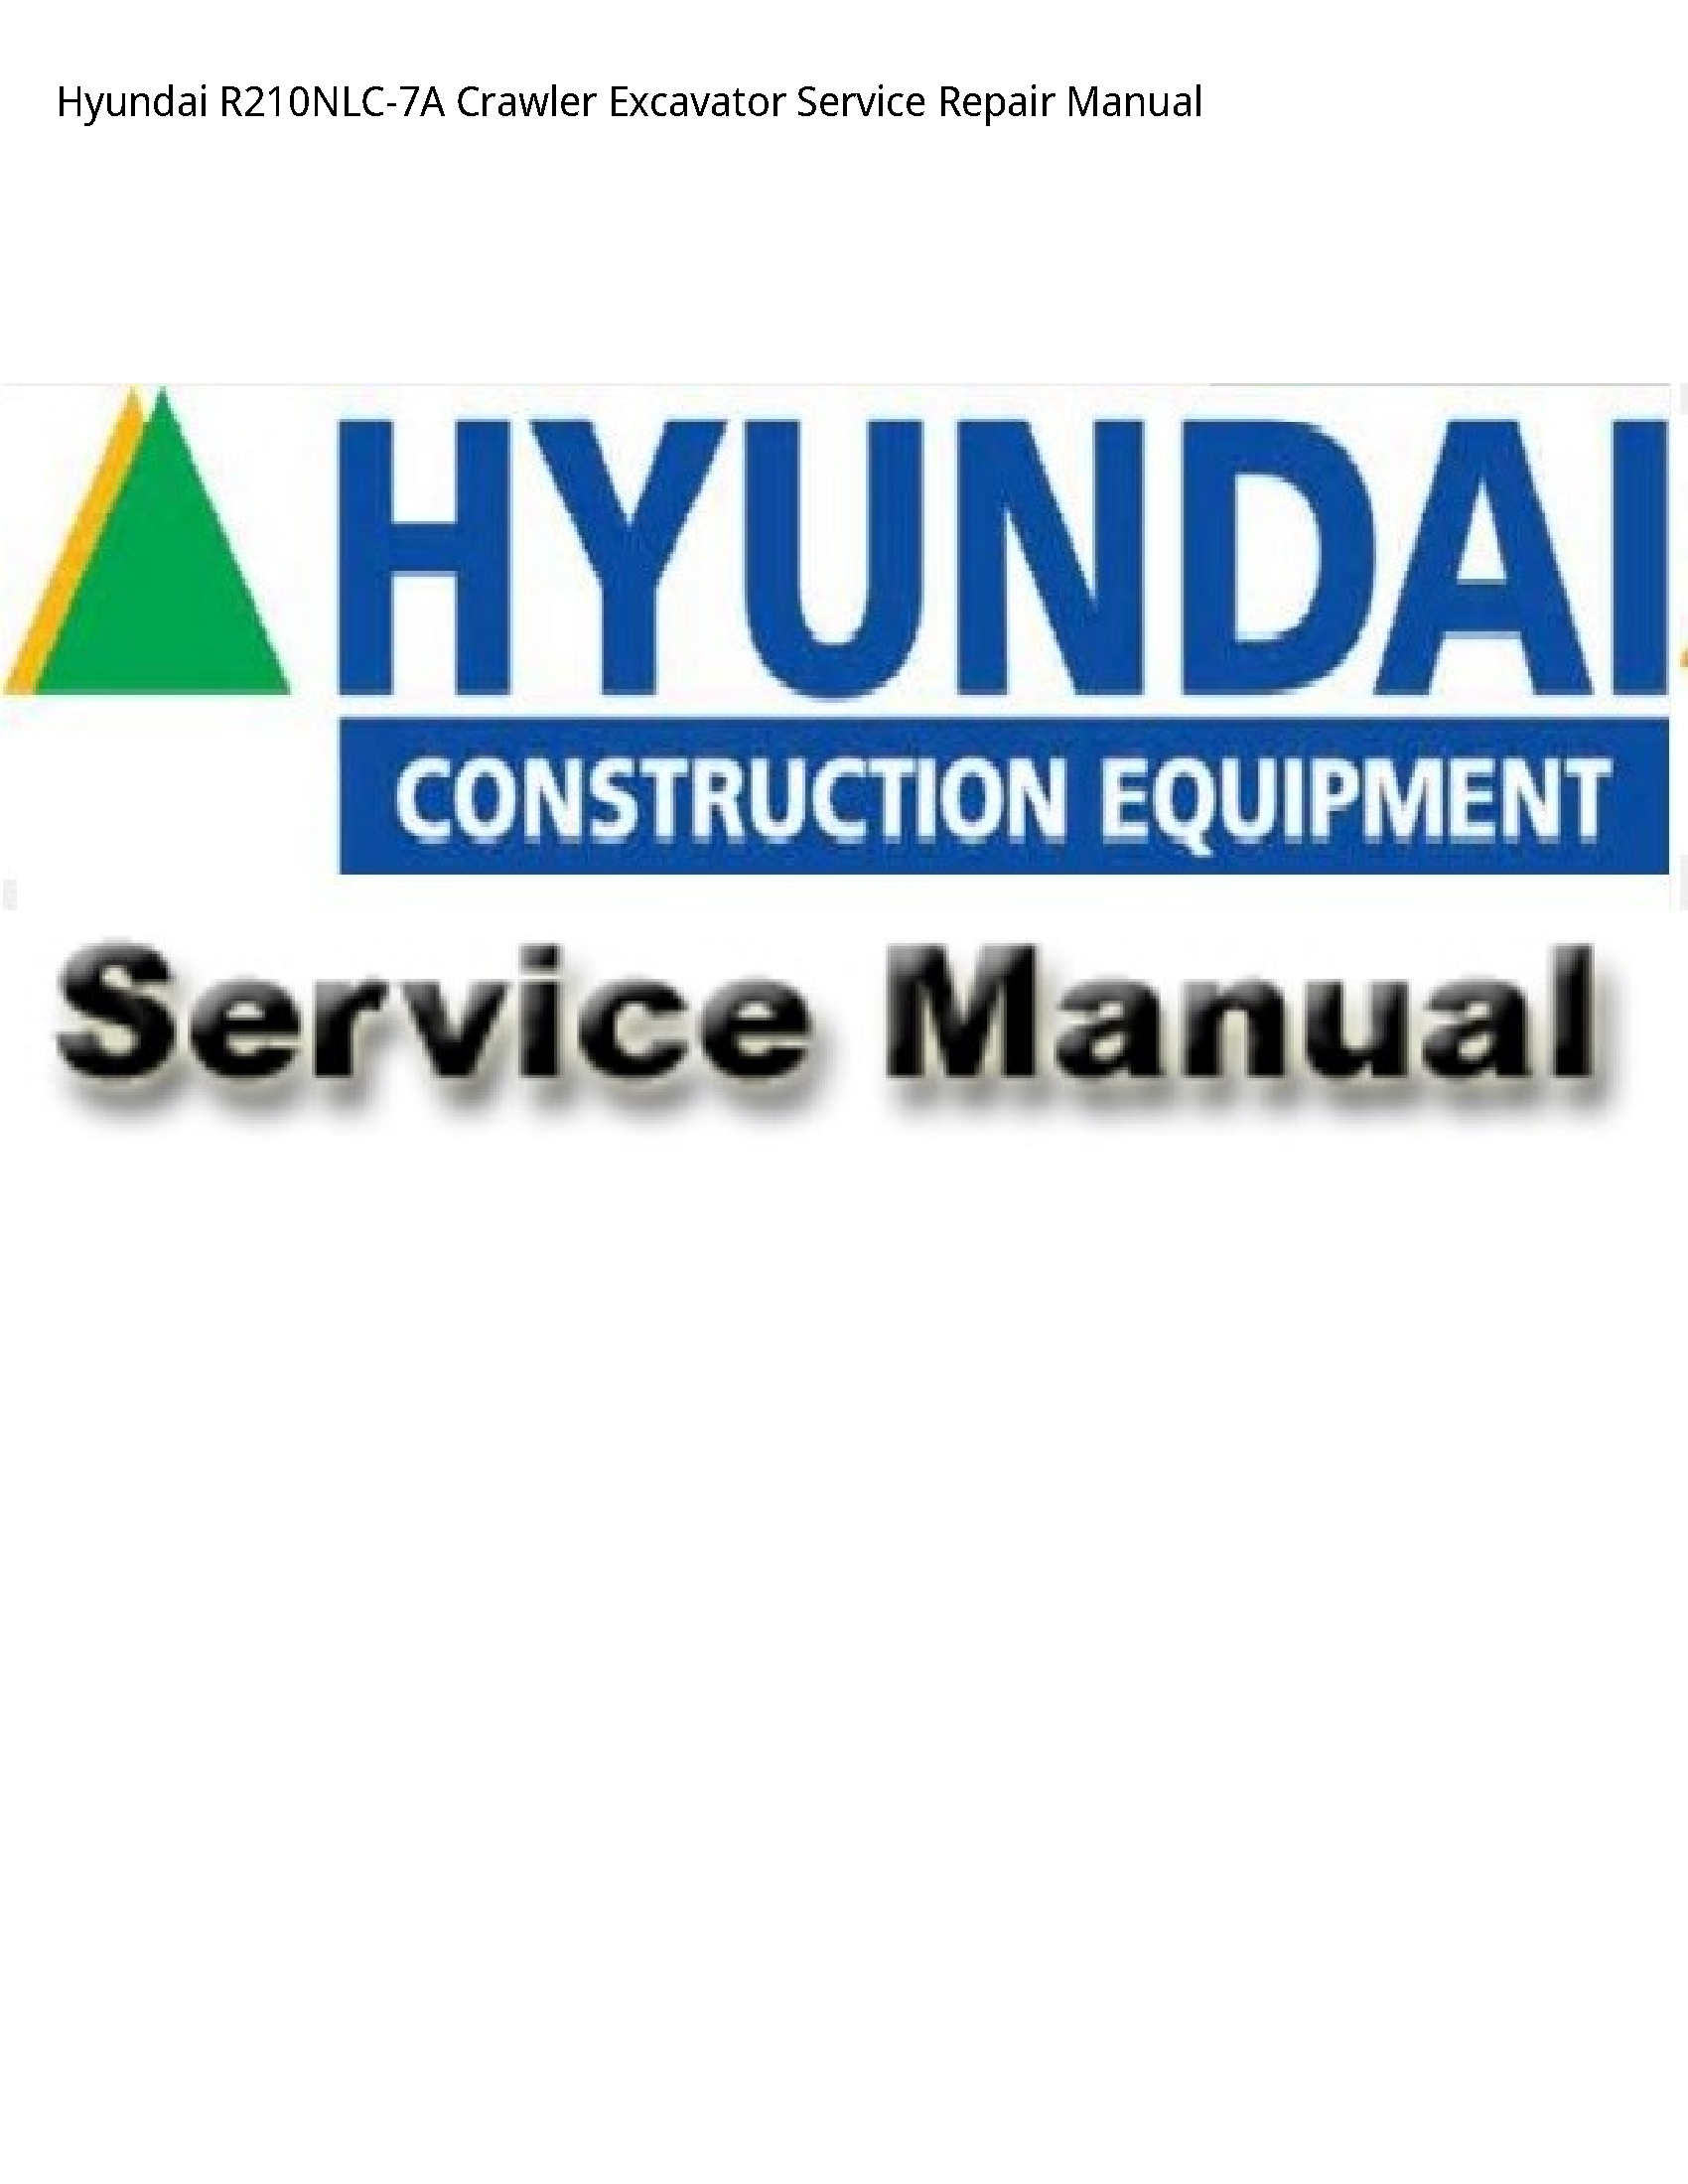 Hyundai R210NLC-7A Crawler Excavator manual